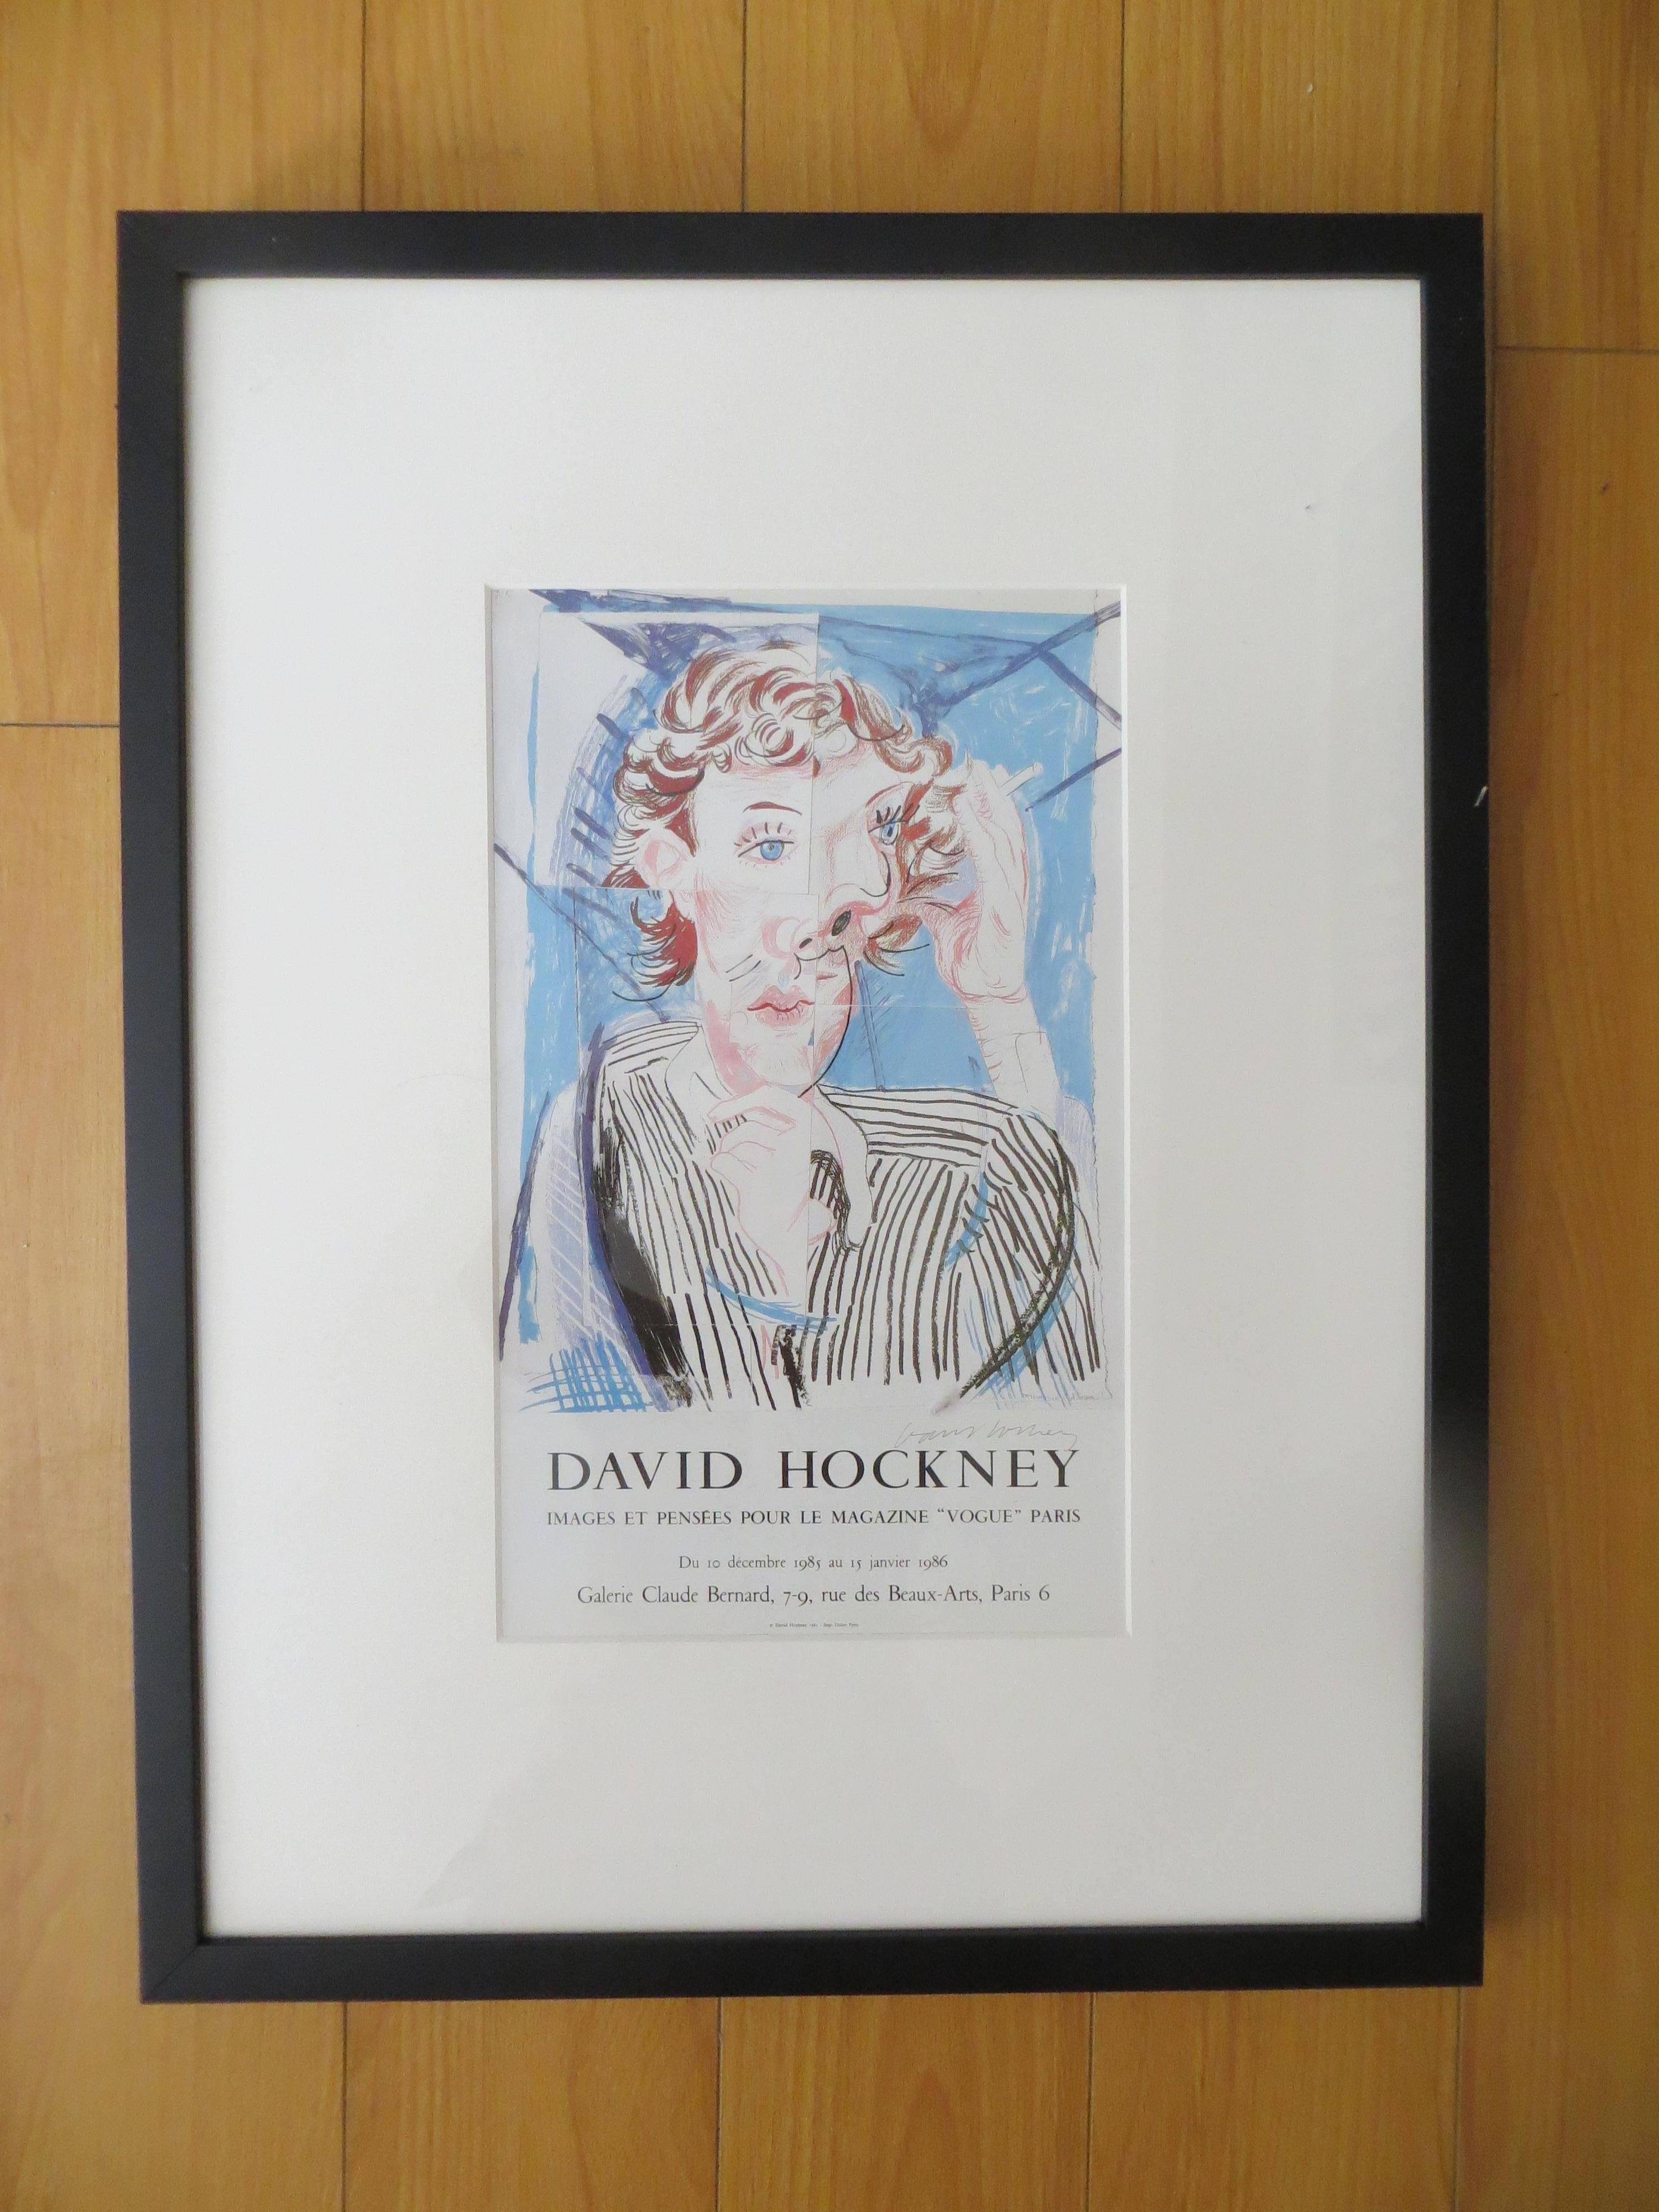 This David Hockney rare vintage 1985 Pop Art lithograph print 